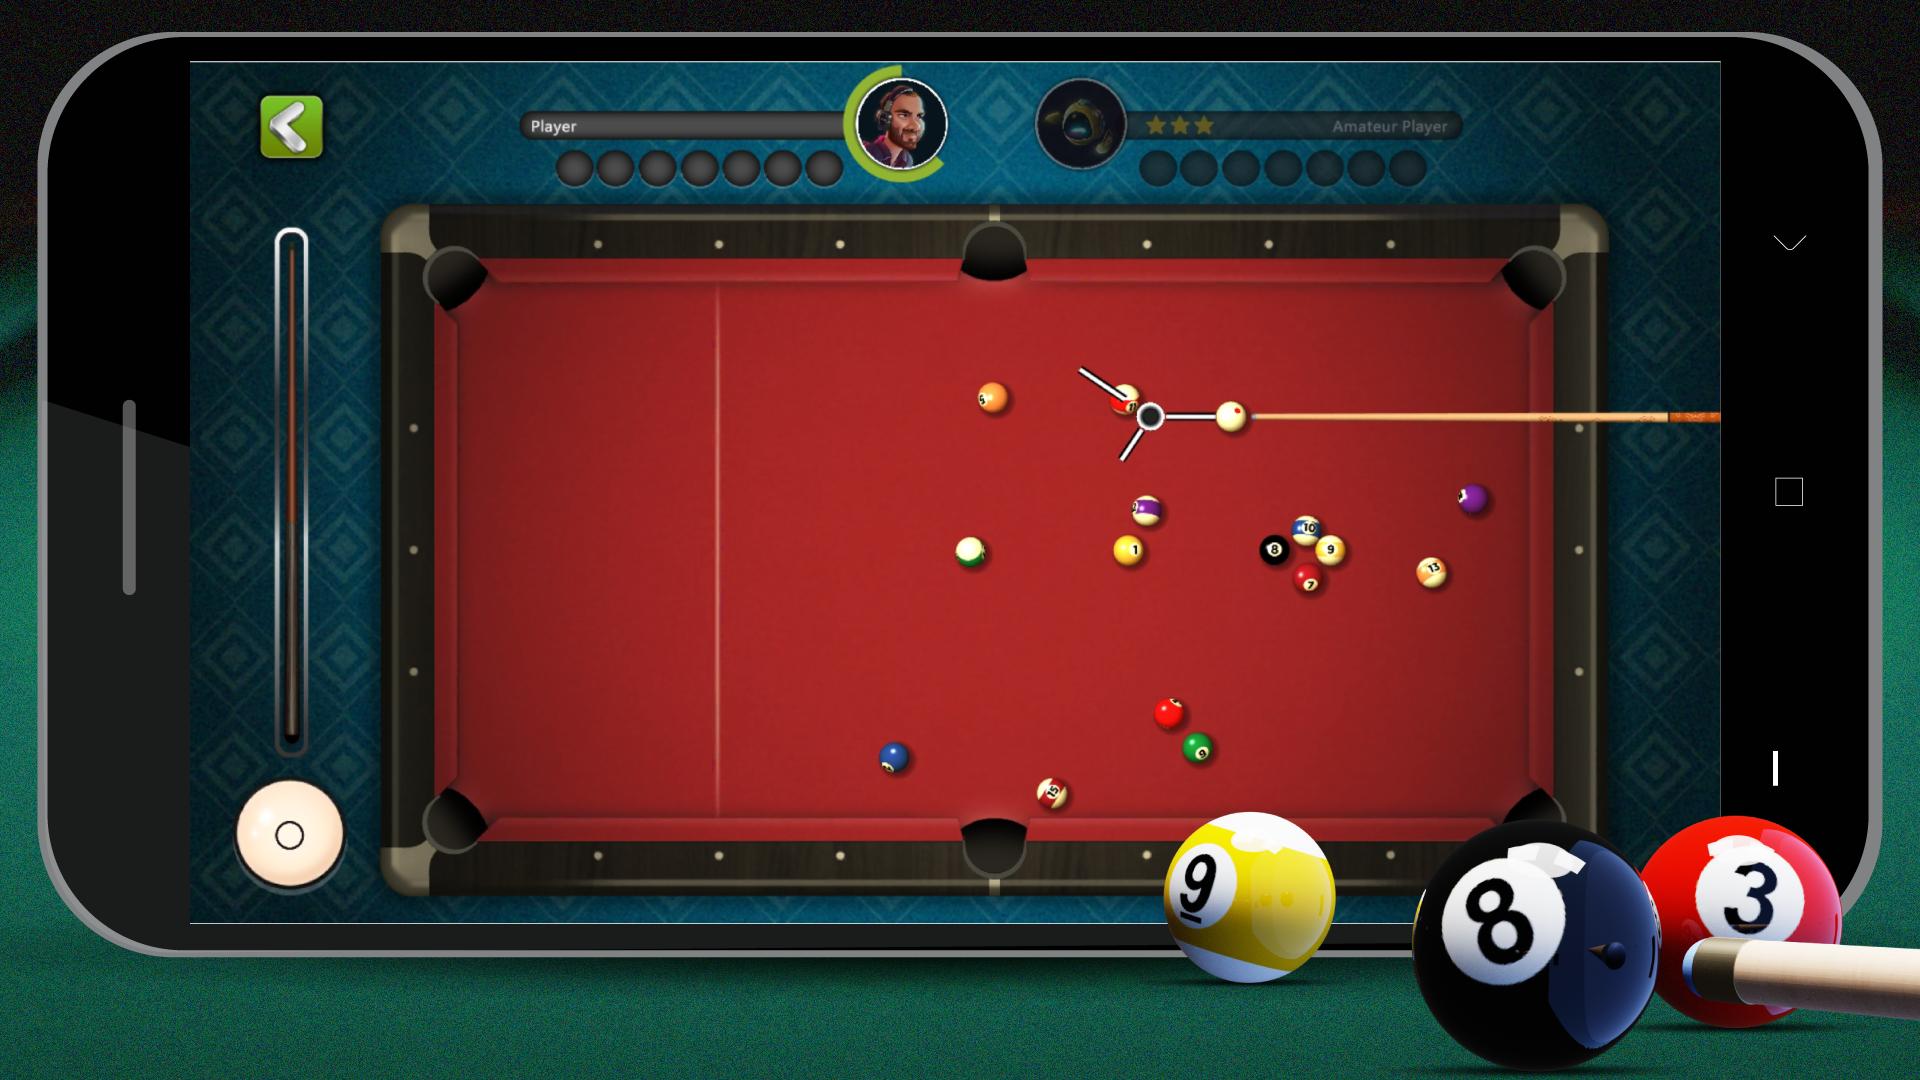 8 Ball Billiards- Offline Free Pool Game 1.51 Screenshot 5